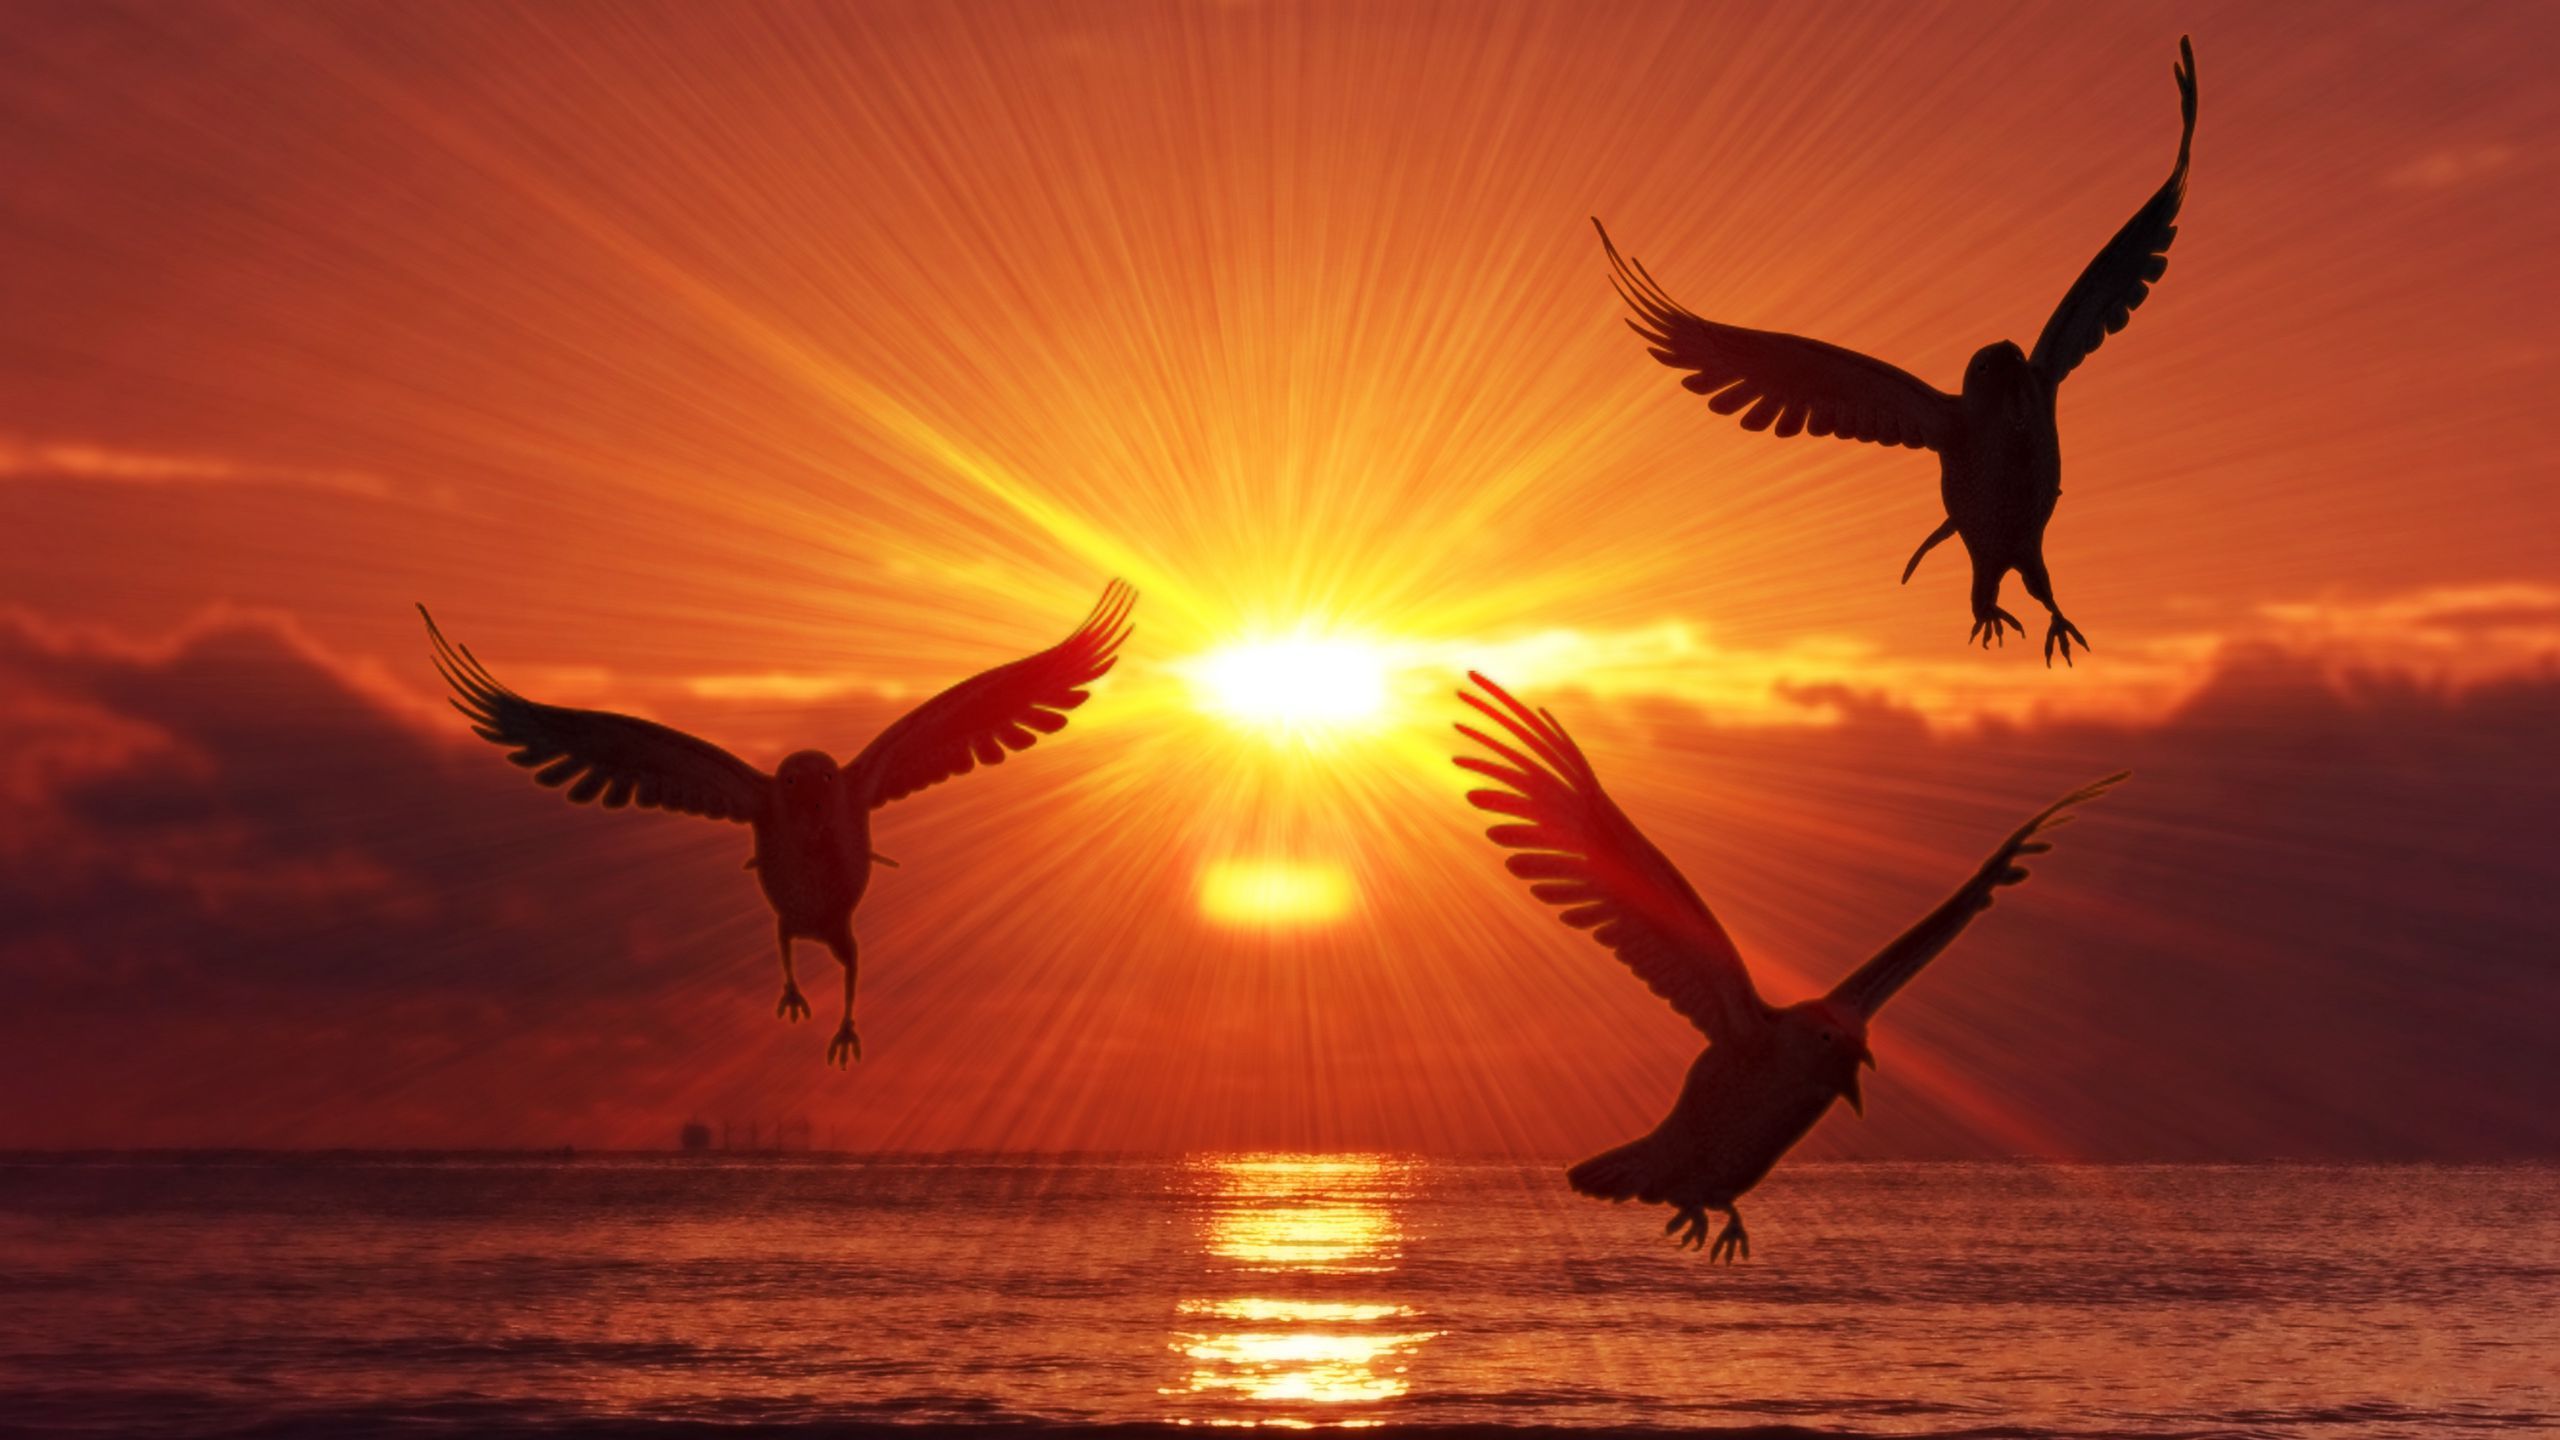 Download wallpaper 2560x1440 birds, silhouettes, sunrise, sea widescreen 16:9 HD background